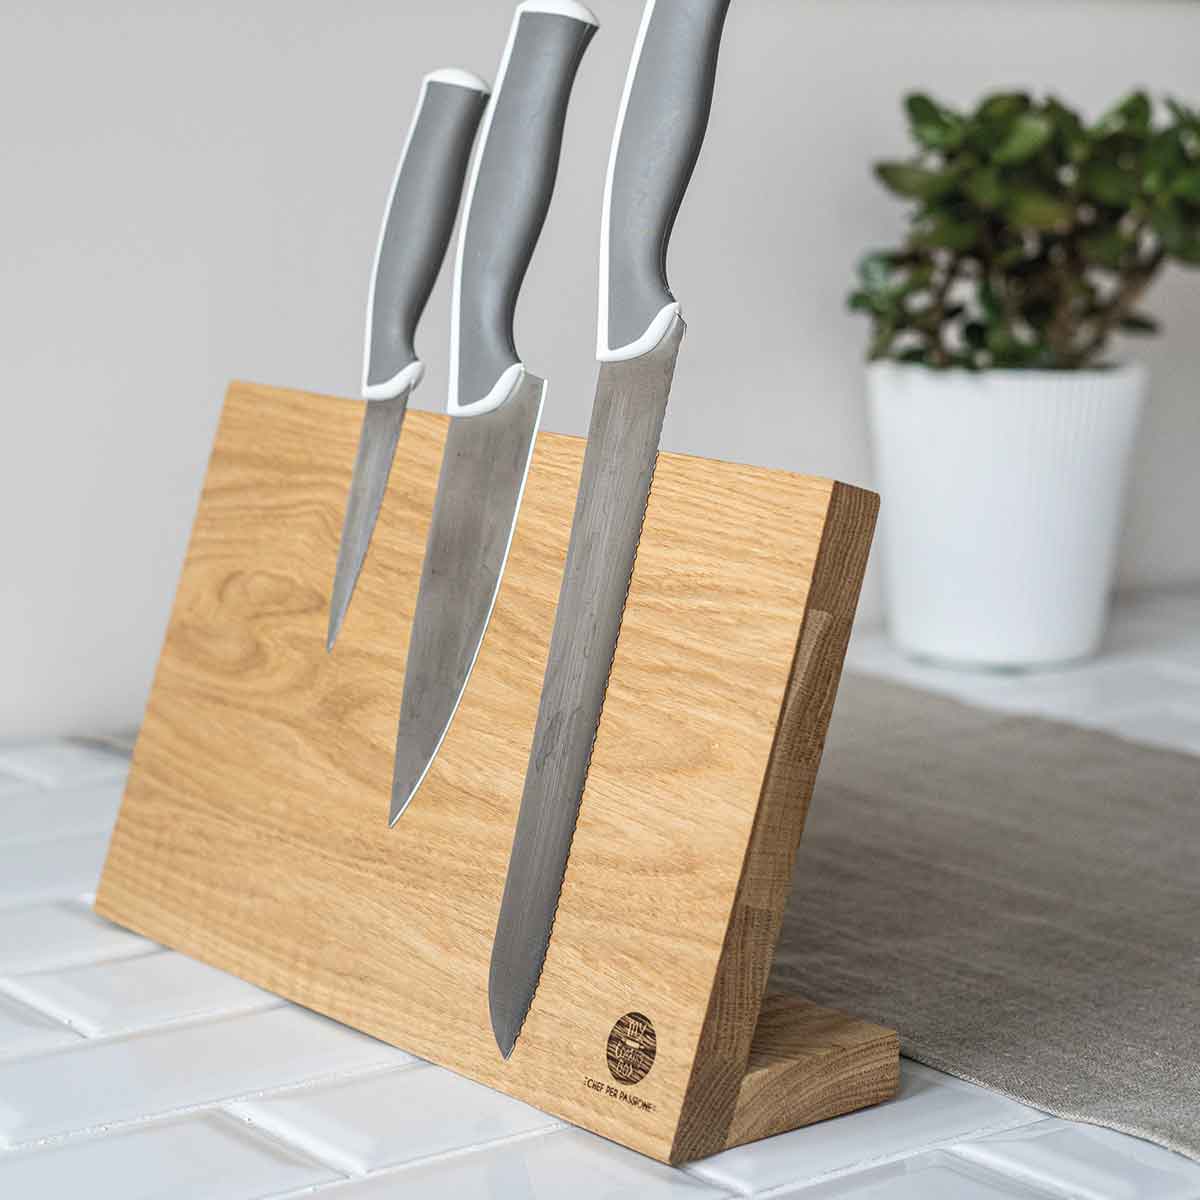 Oak knives holder with magnets